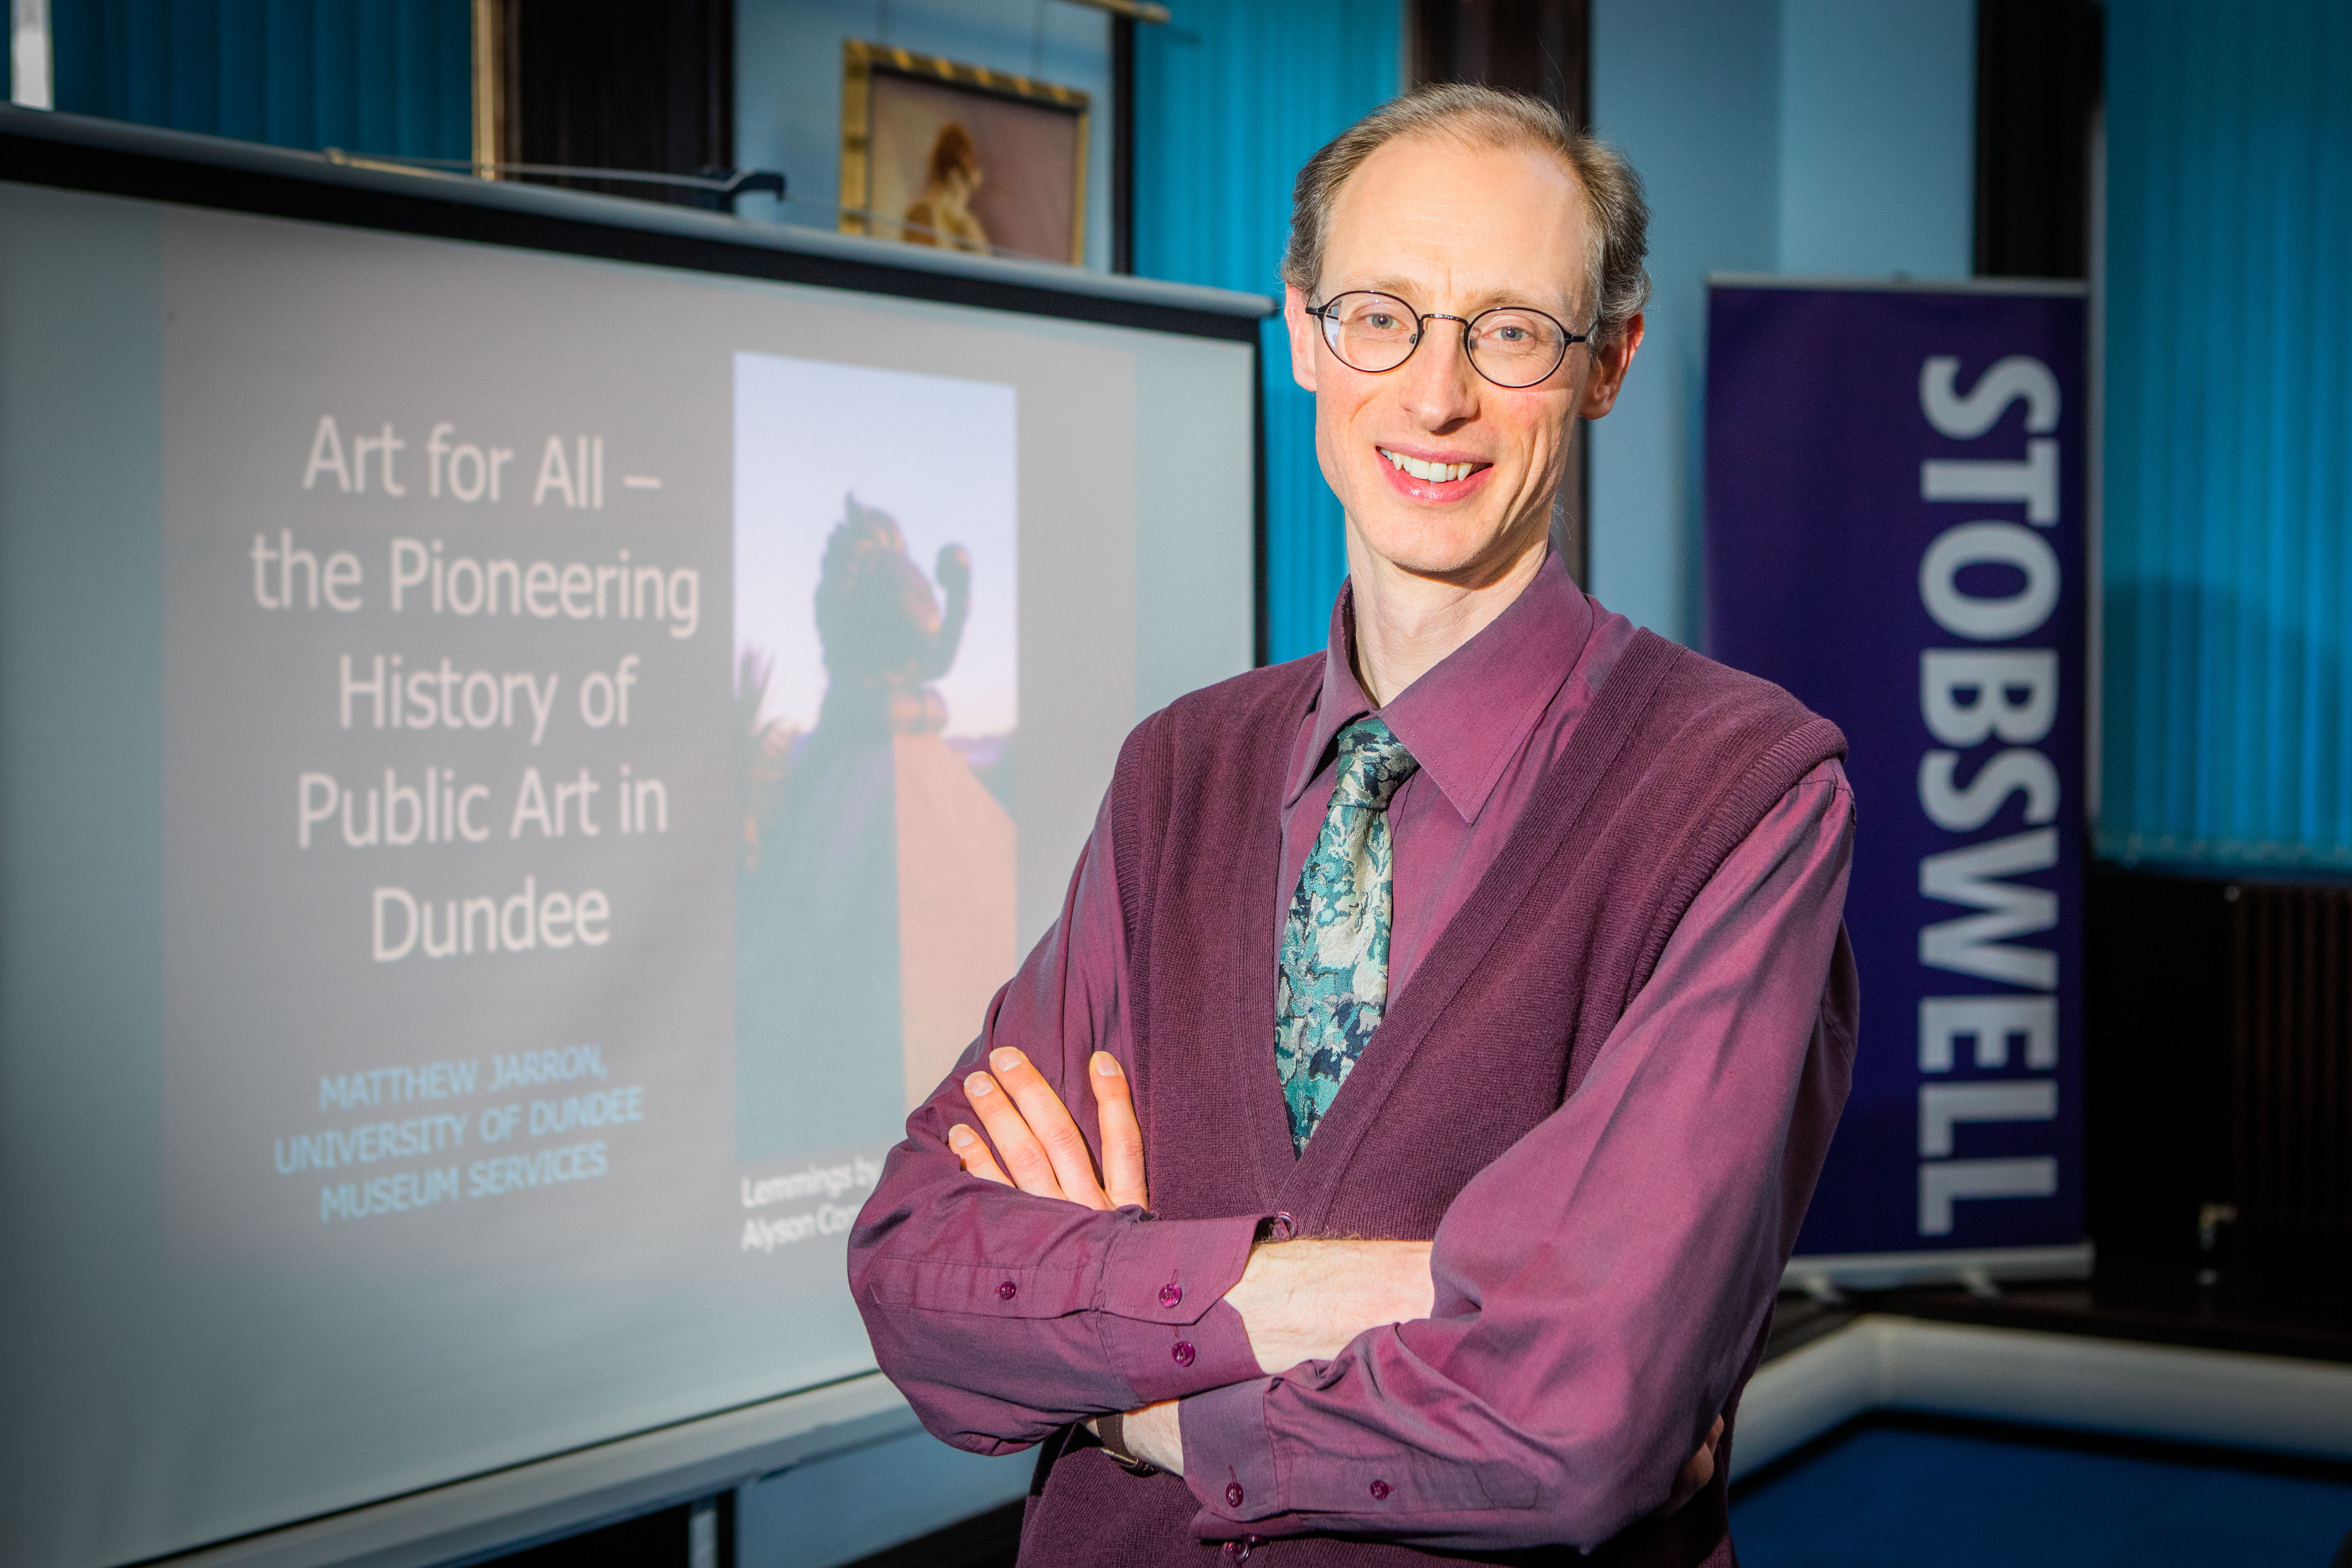 Matthew Jarron (Curator of Museum Services, Dundee University)